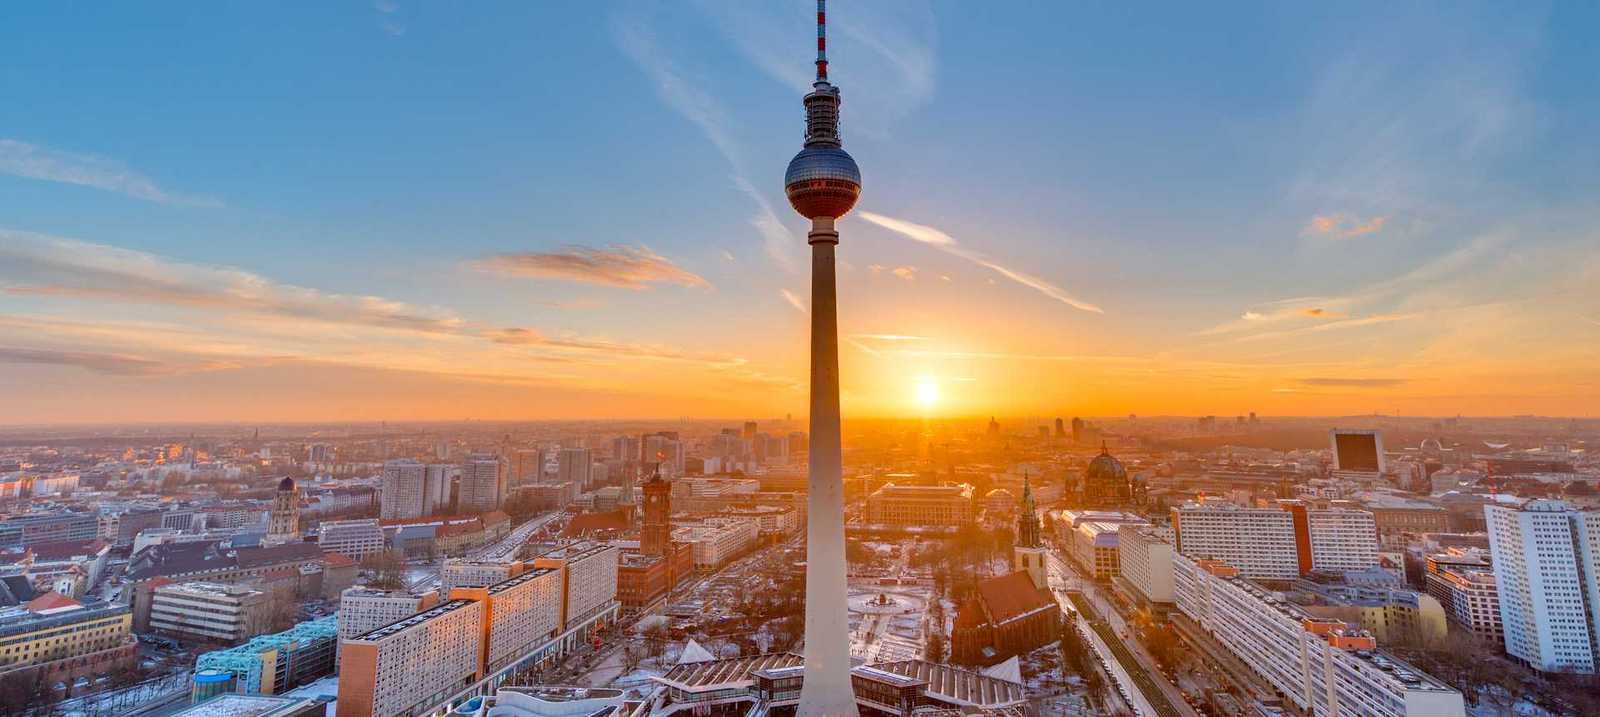 Sonnenuntergang über Berlin